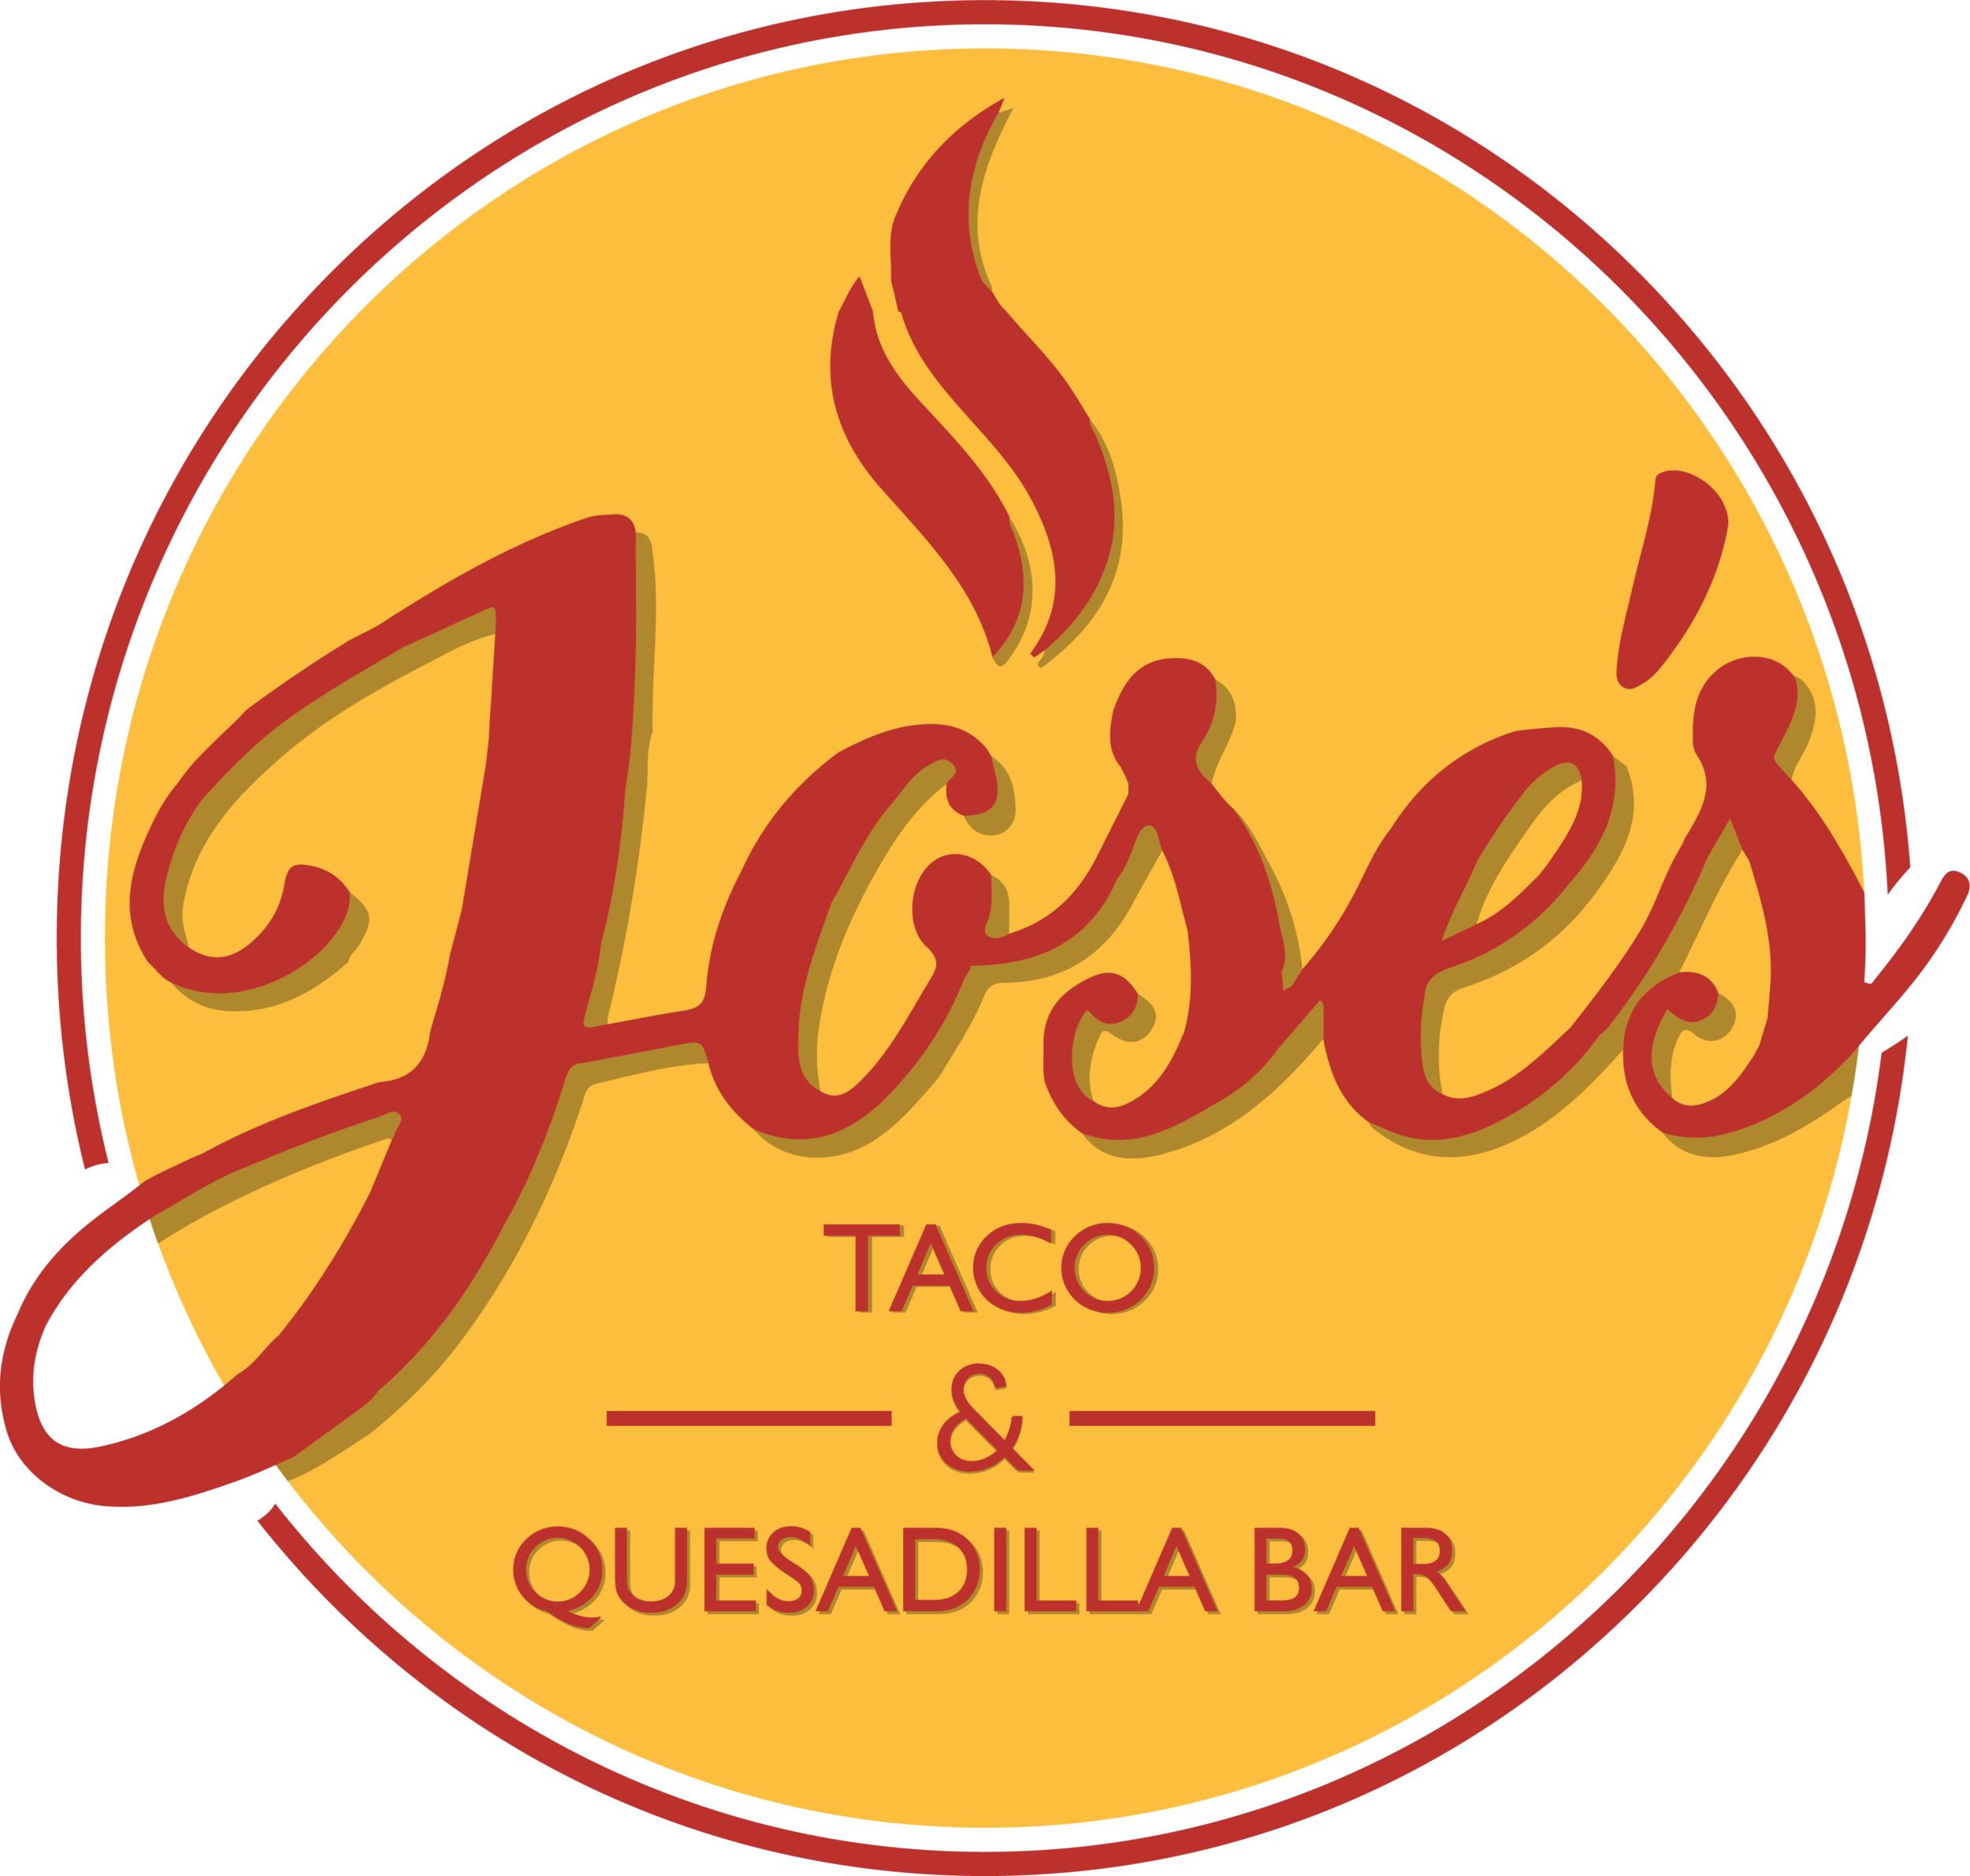 Jose's Taco & Quesadilla bar